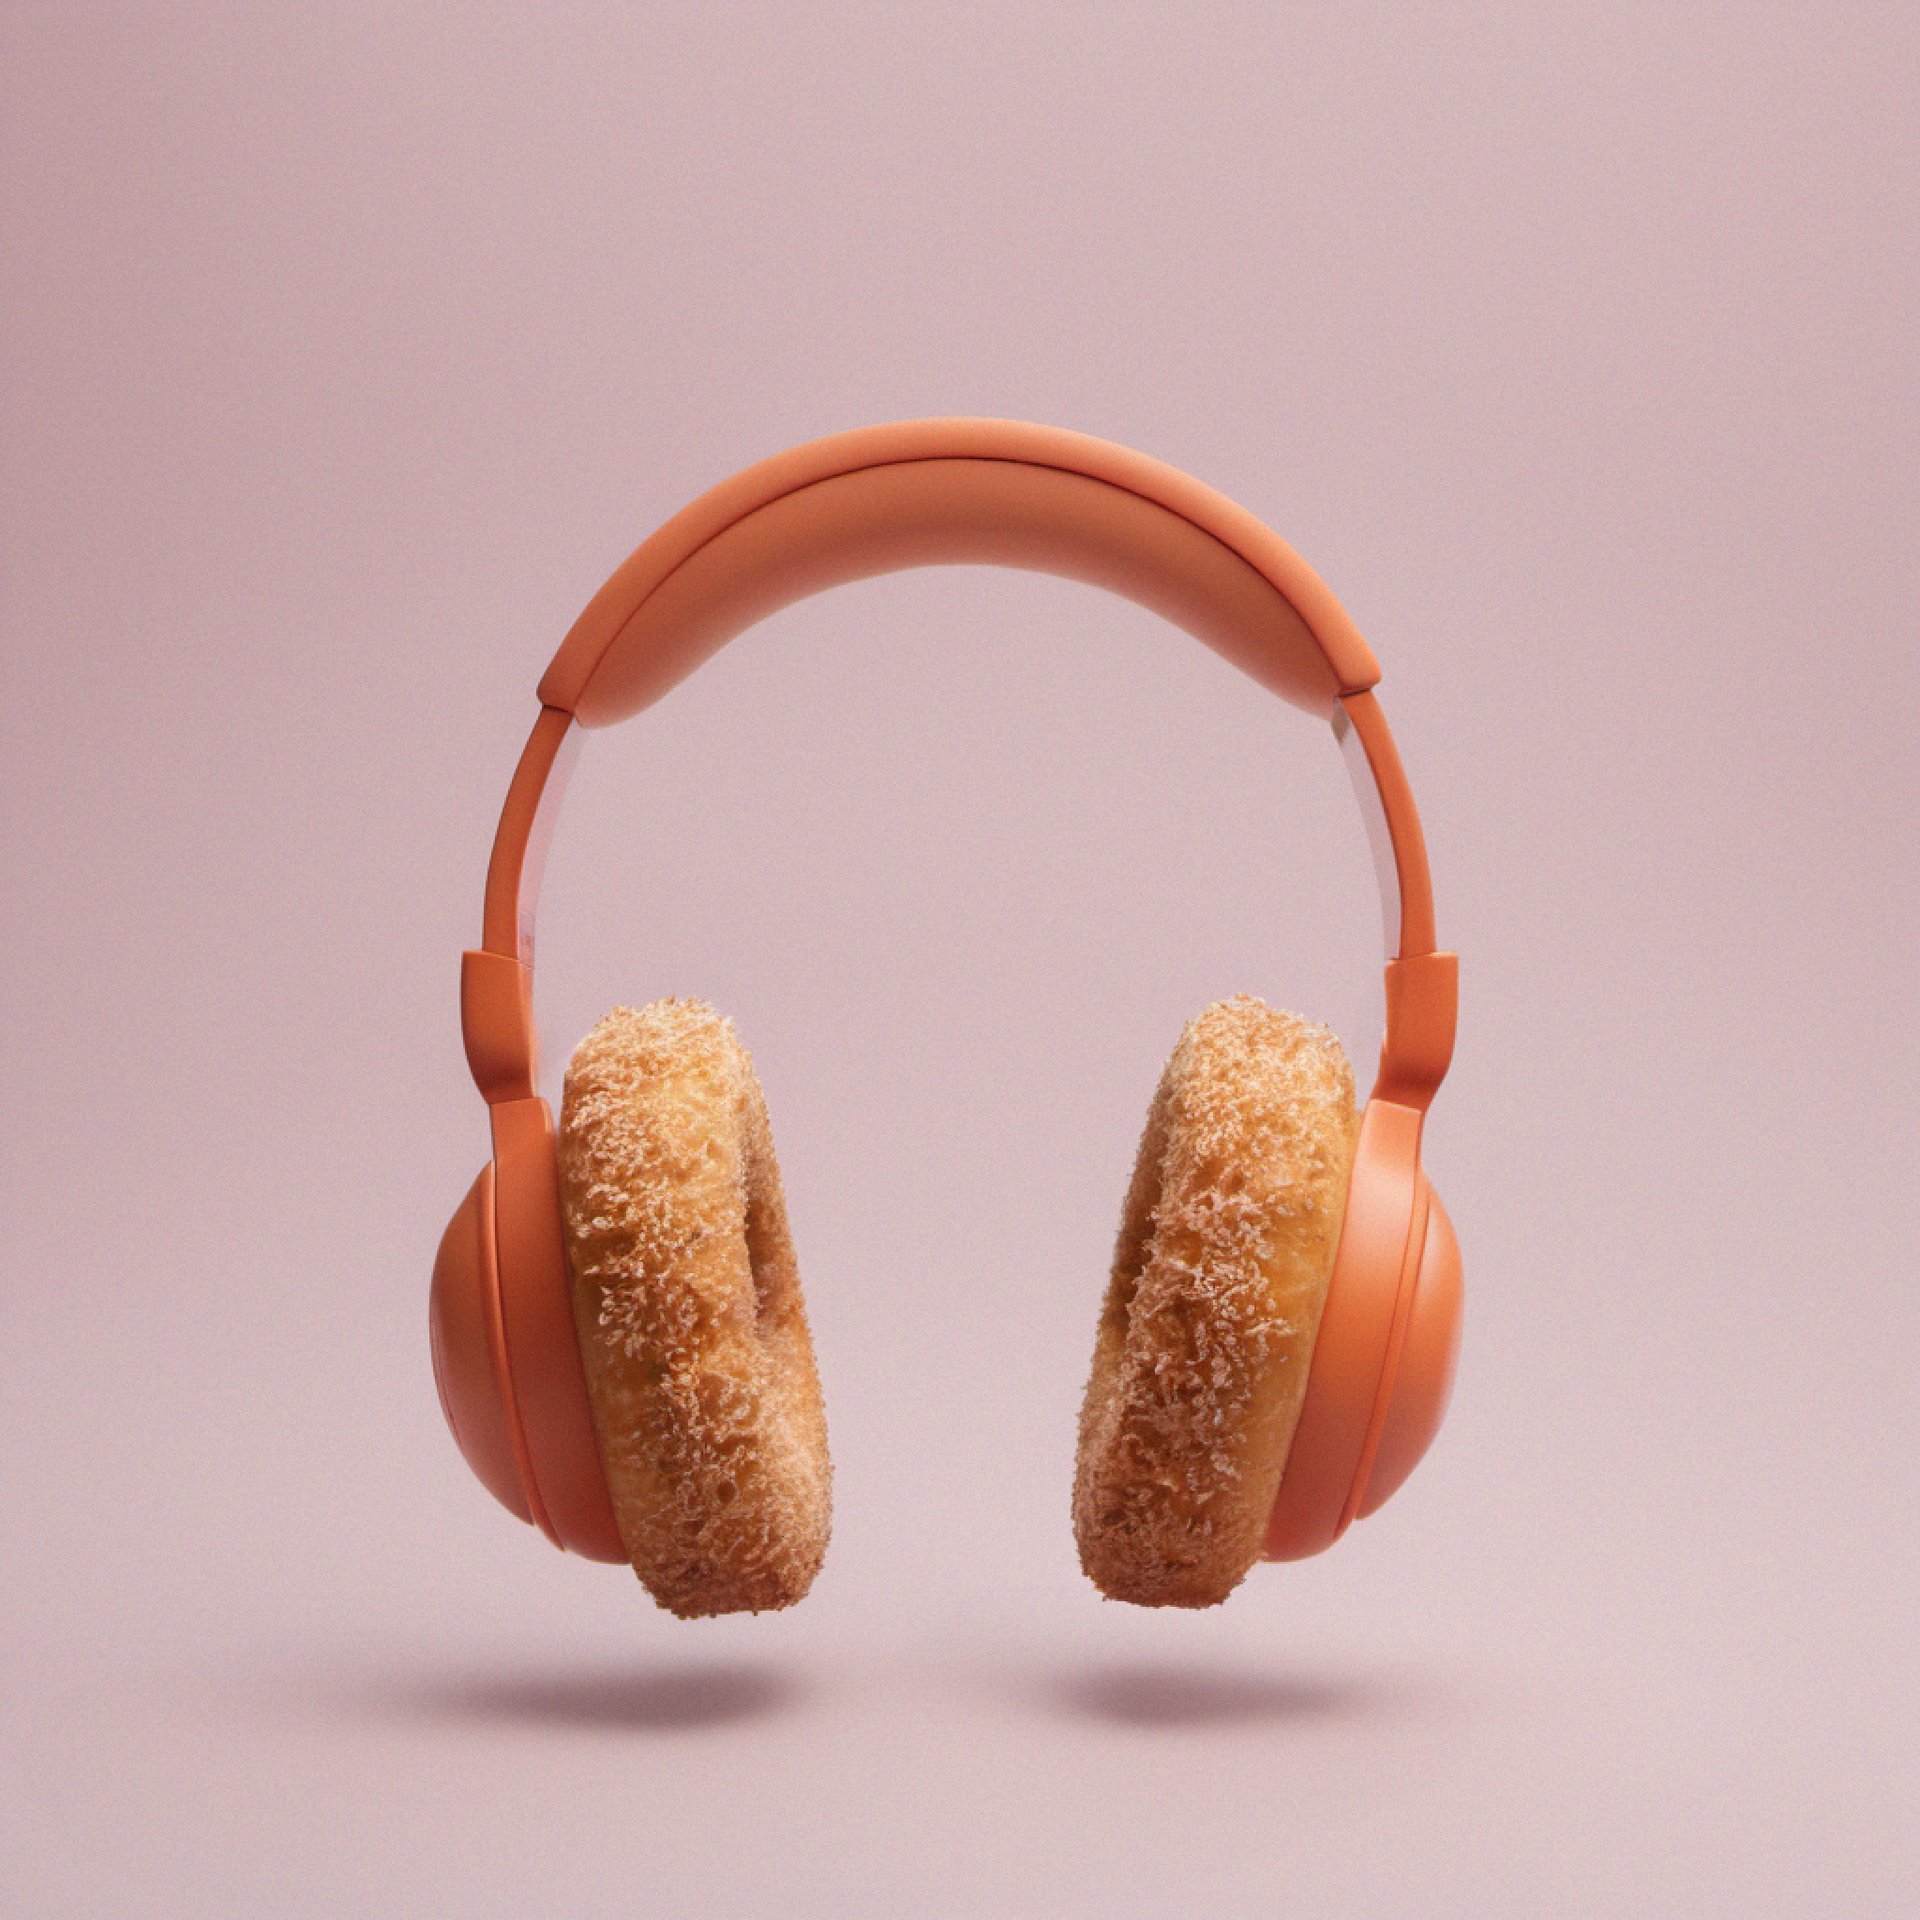 Doughnut-shaped headphone